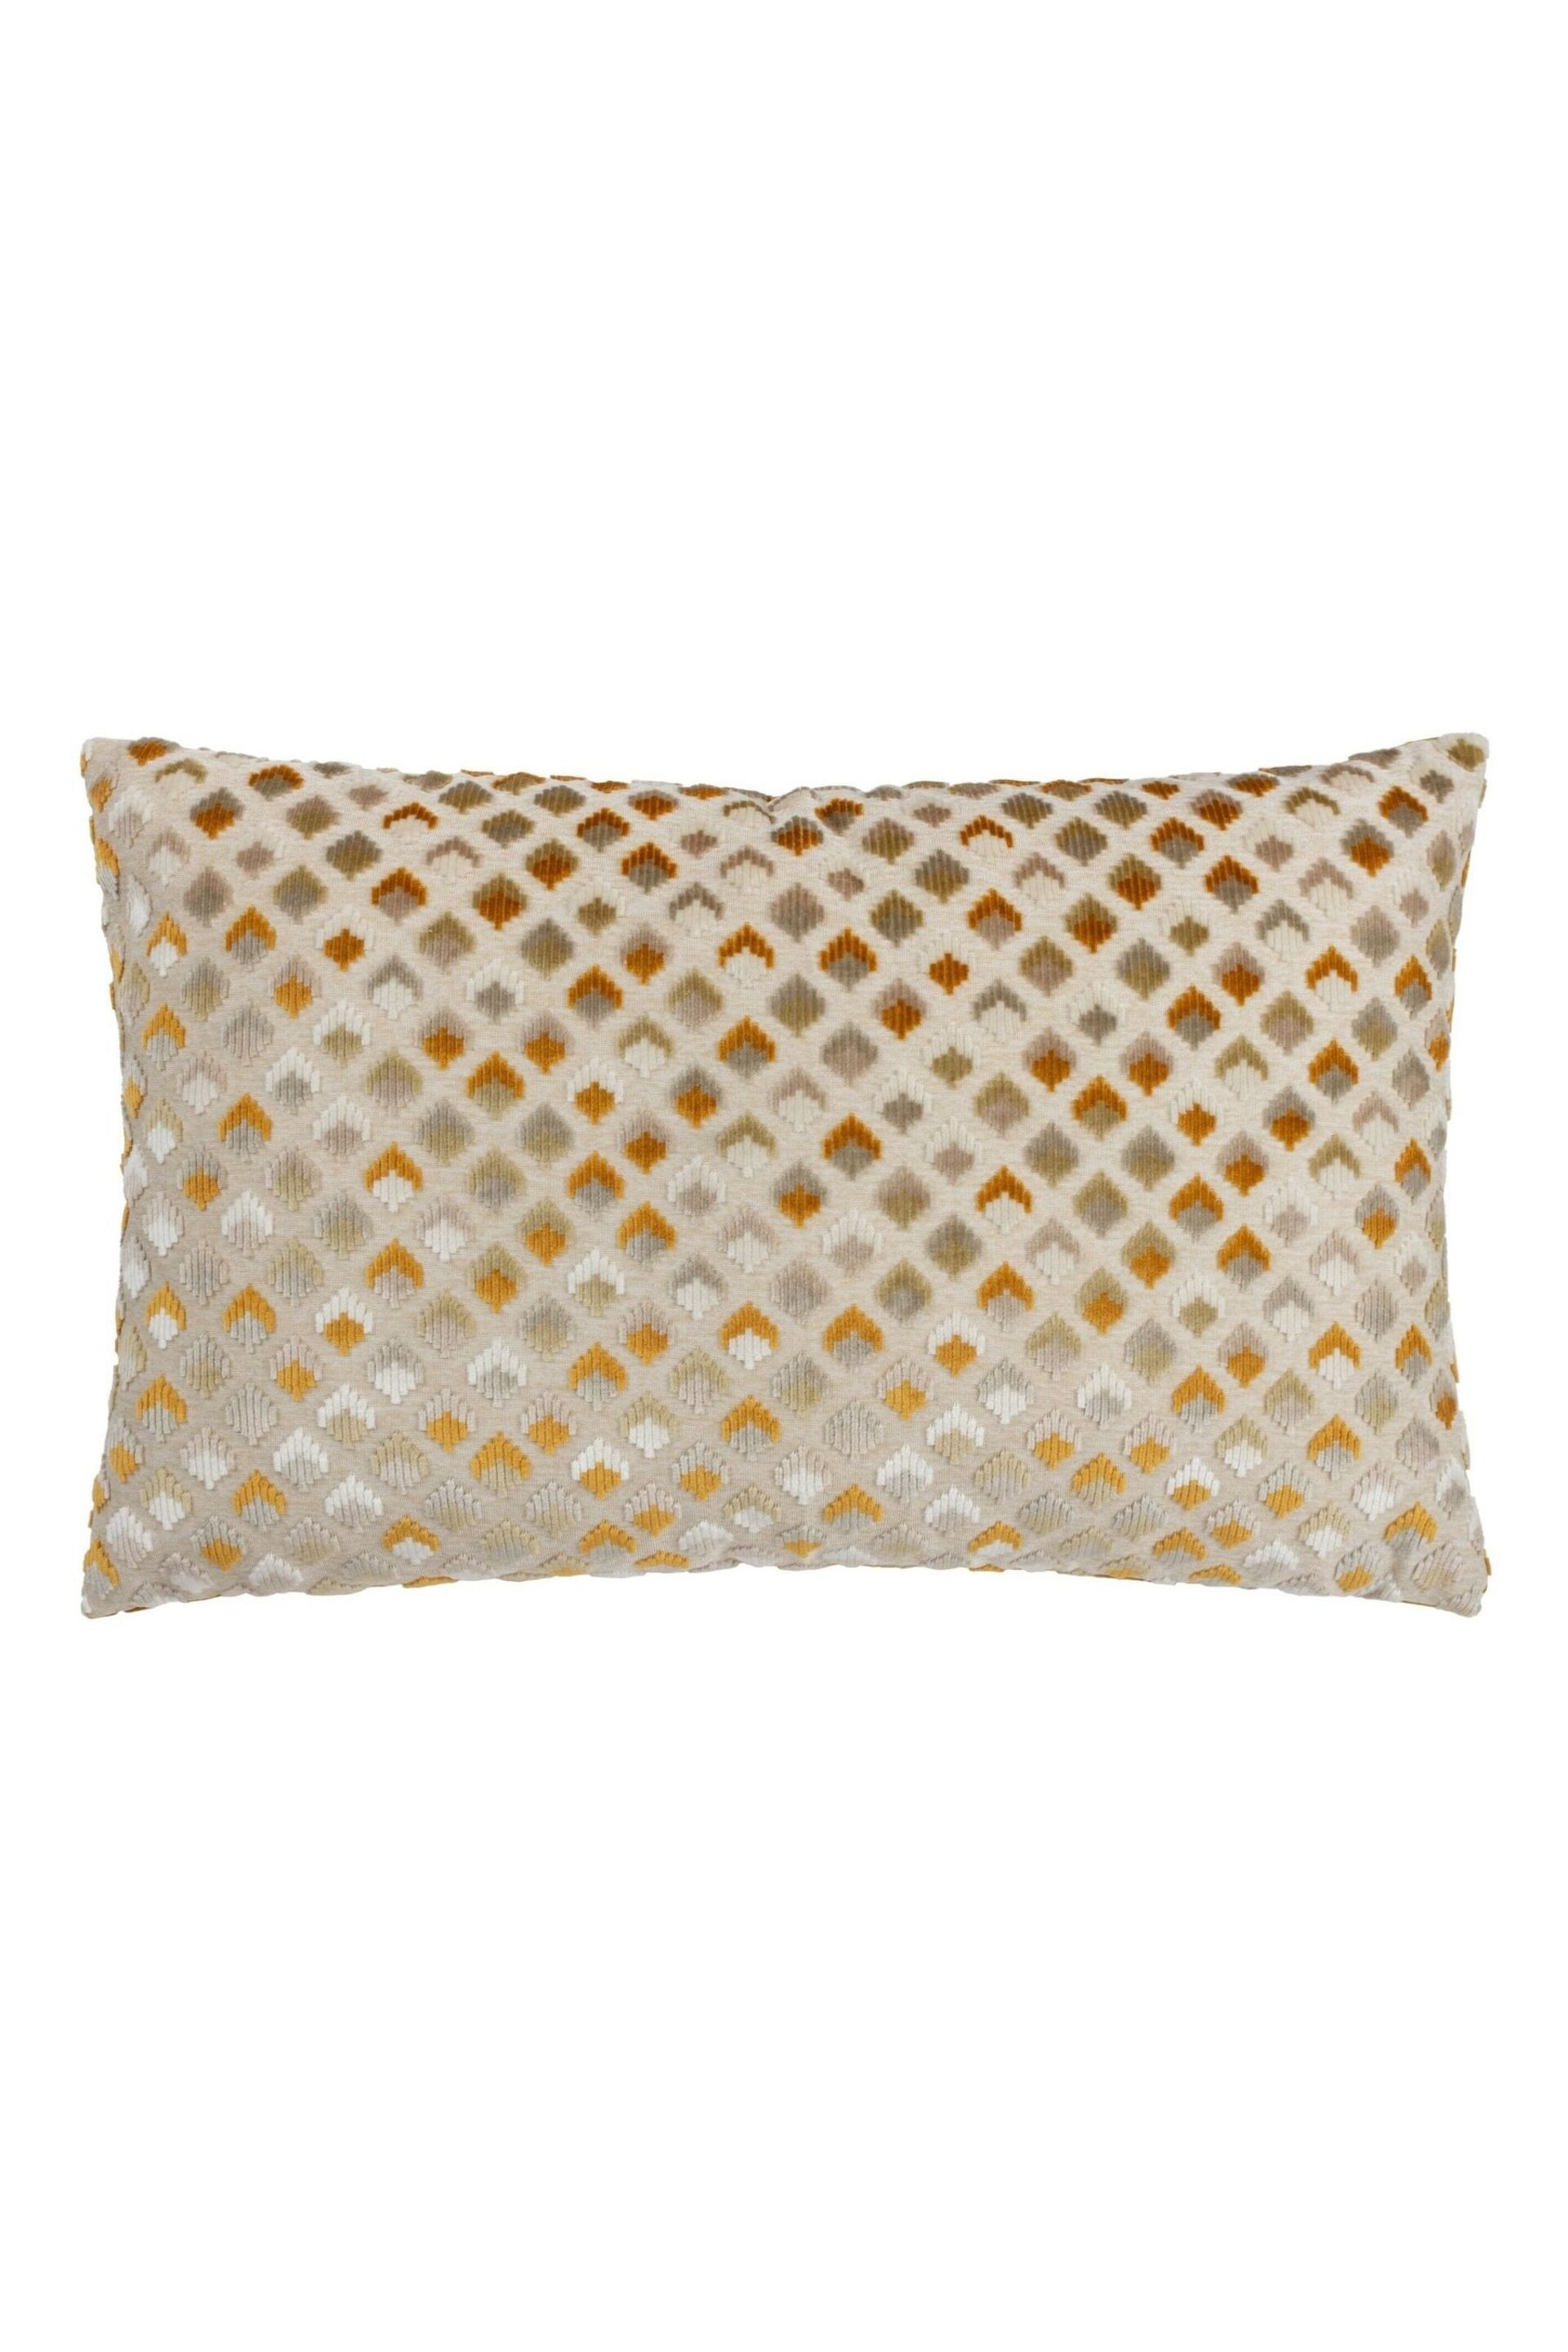 Paoletti Gold Lexington Velvet Jacquard Feather Filled Cushion - Image 1 of 5